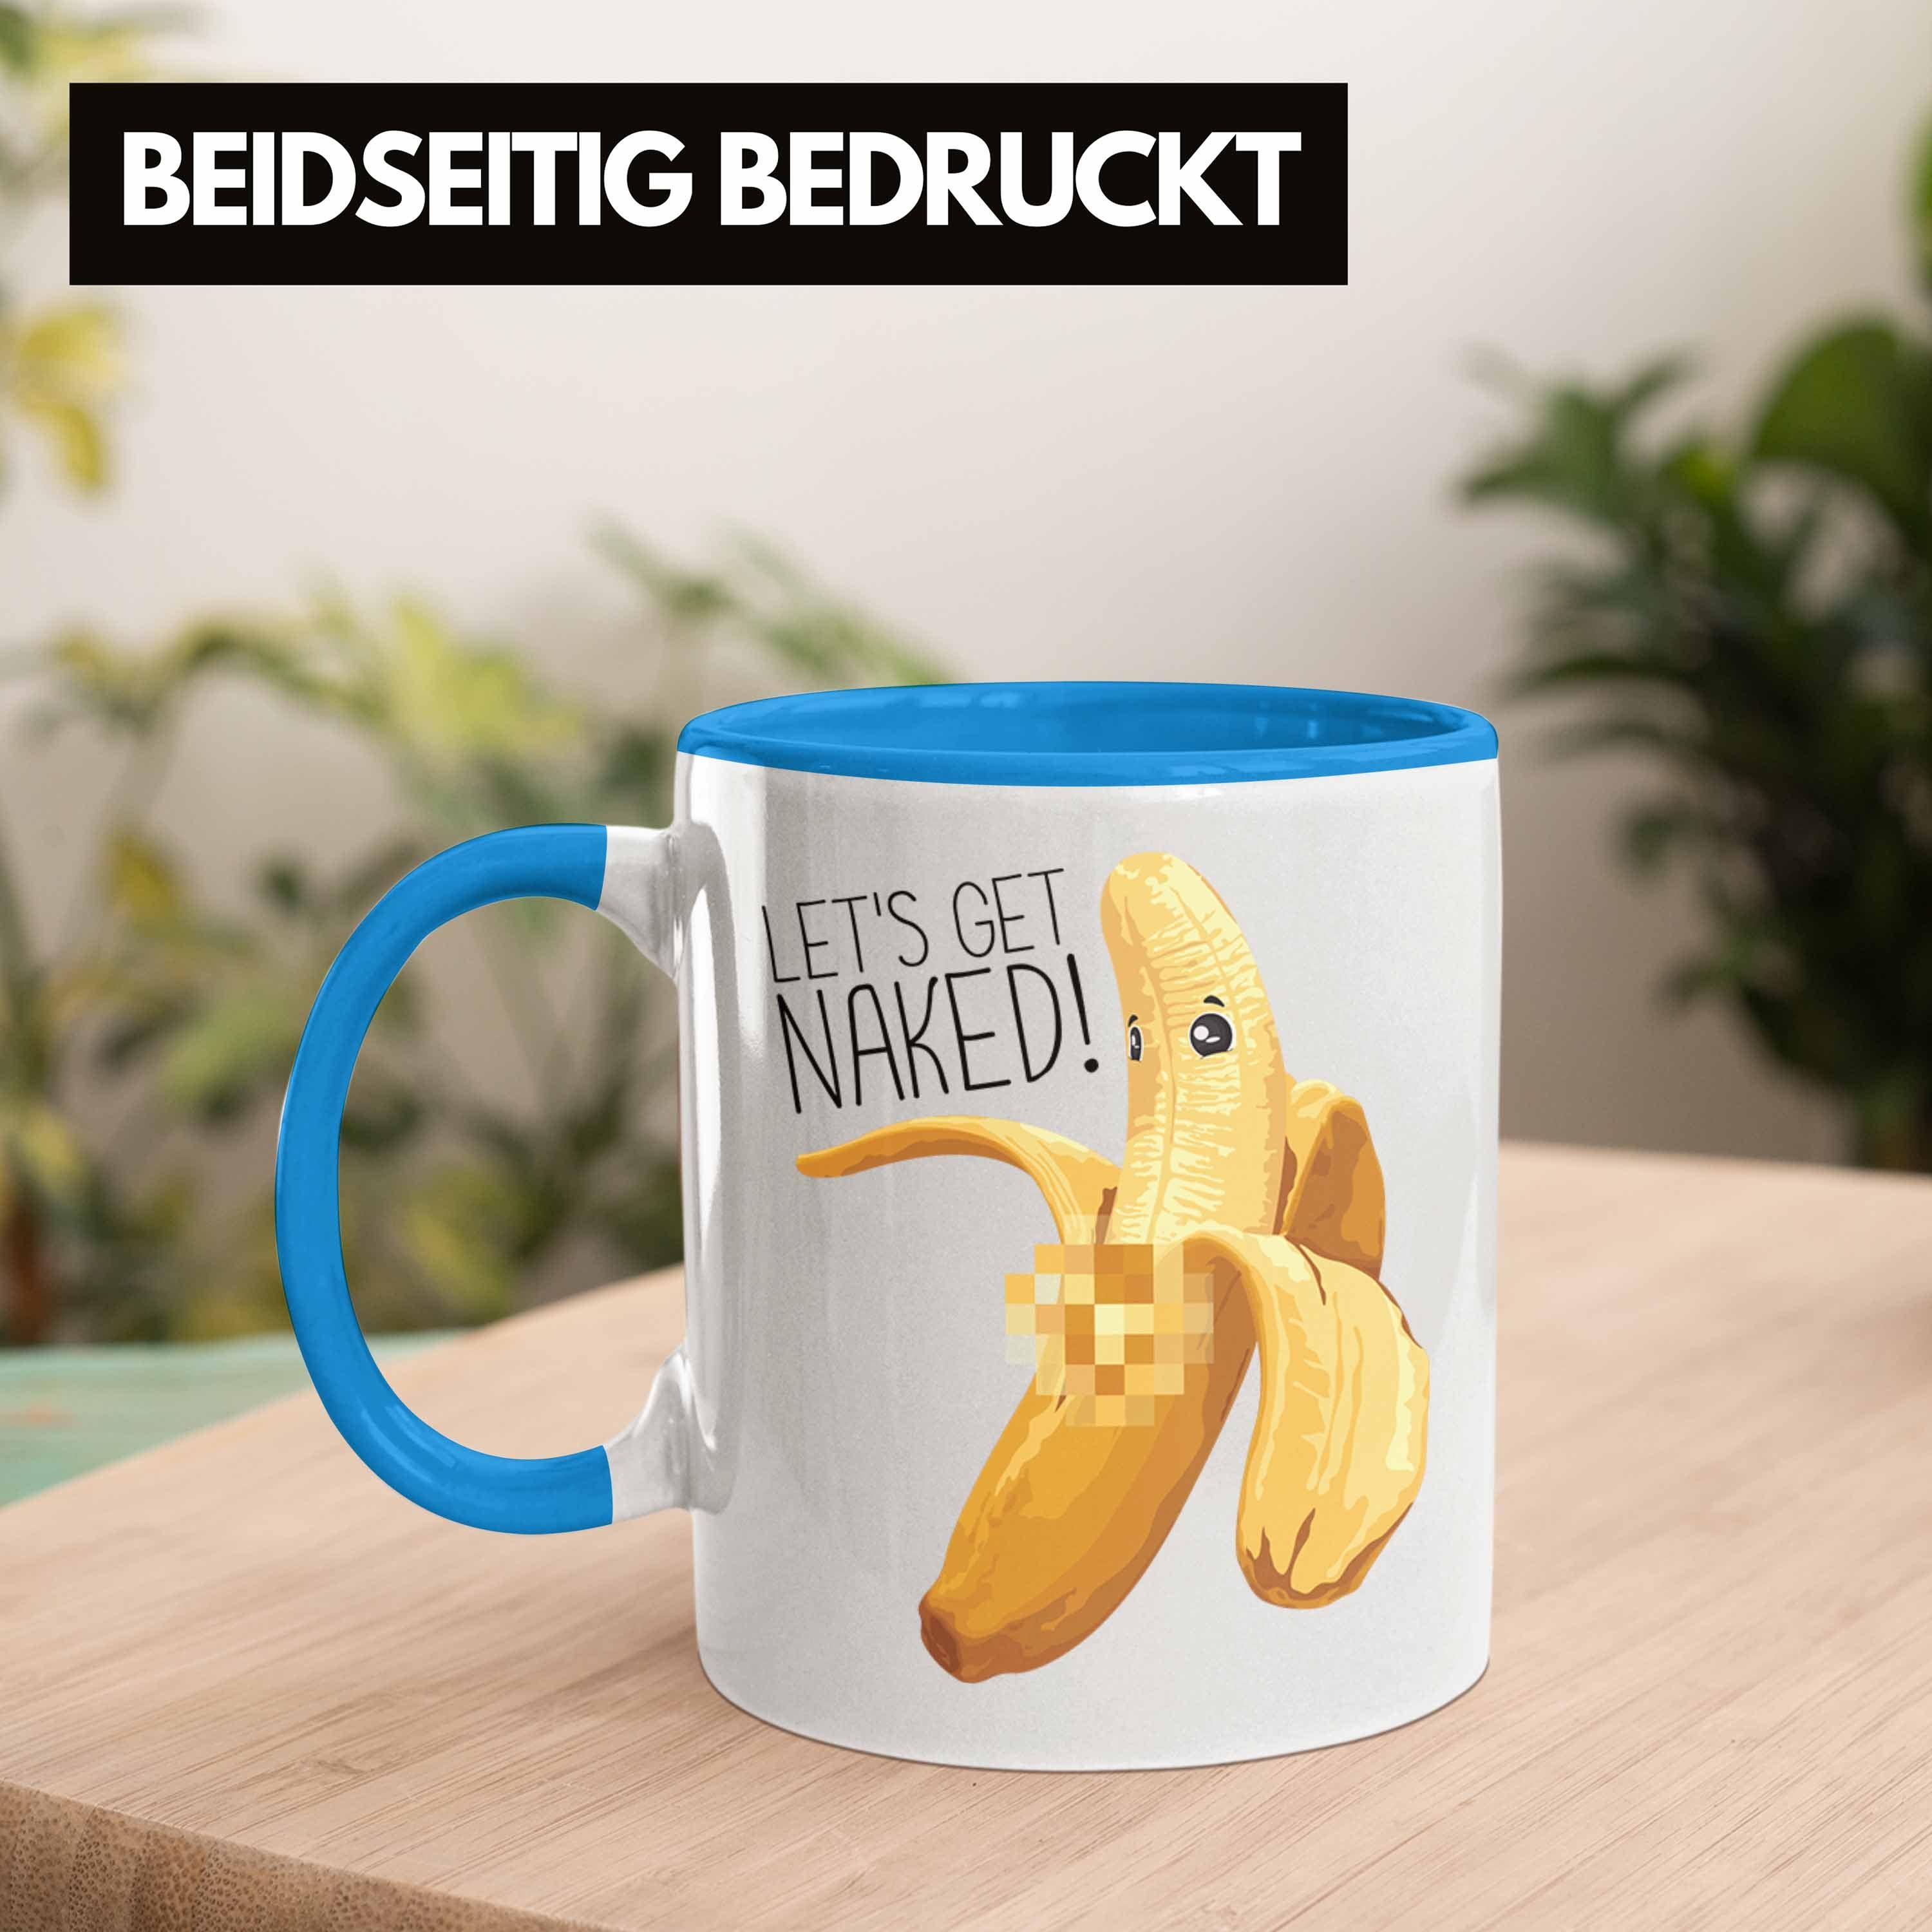 Trendation Tasse Naked Get Striptease Blau Lets Tasse Humor Geschenk Erwachsener Bech Banane